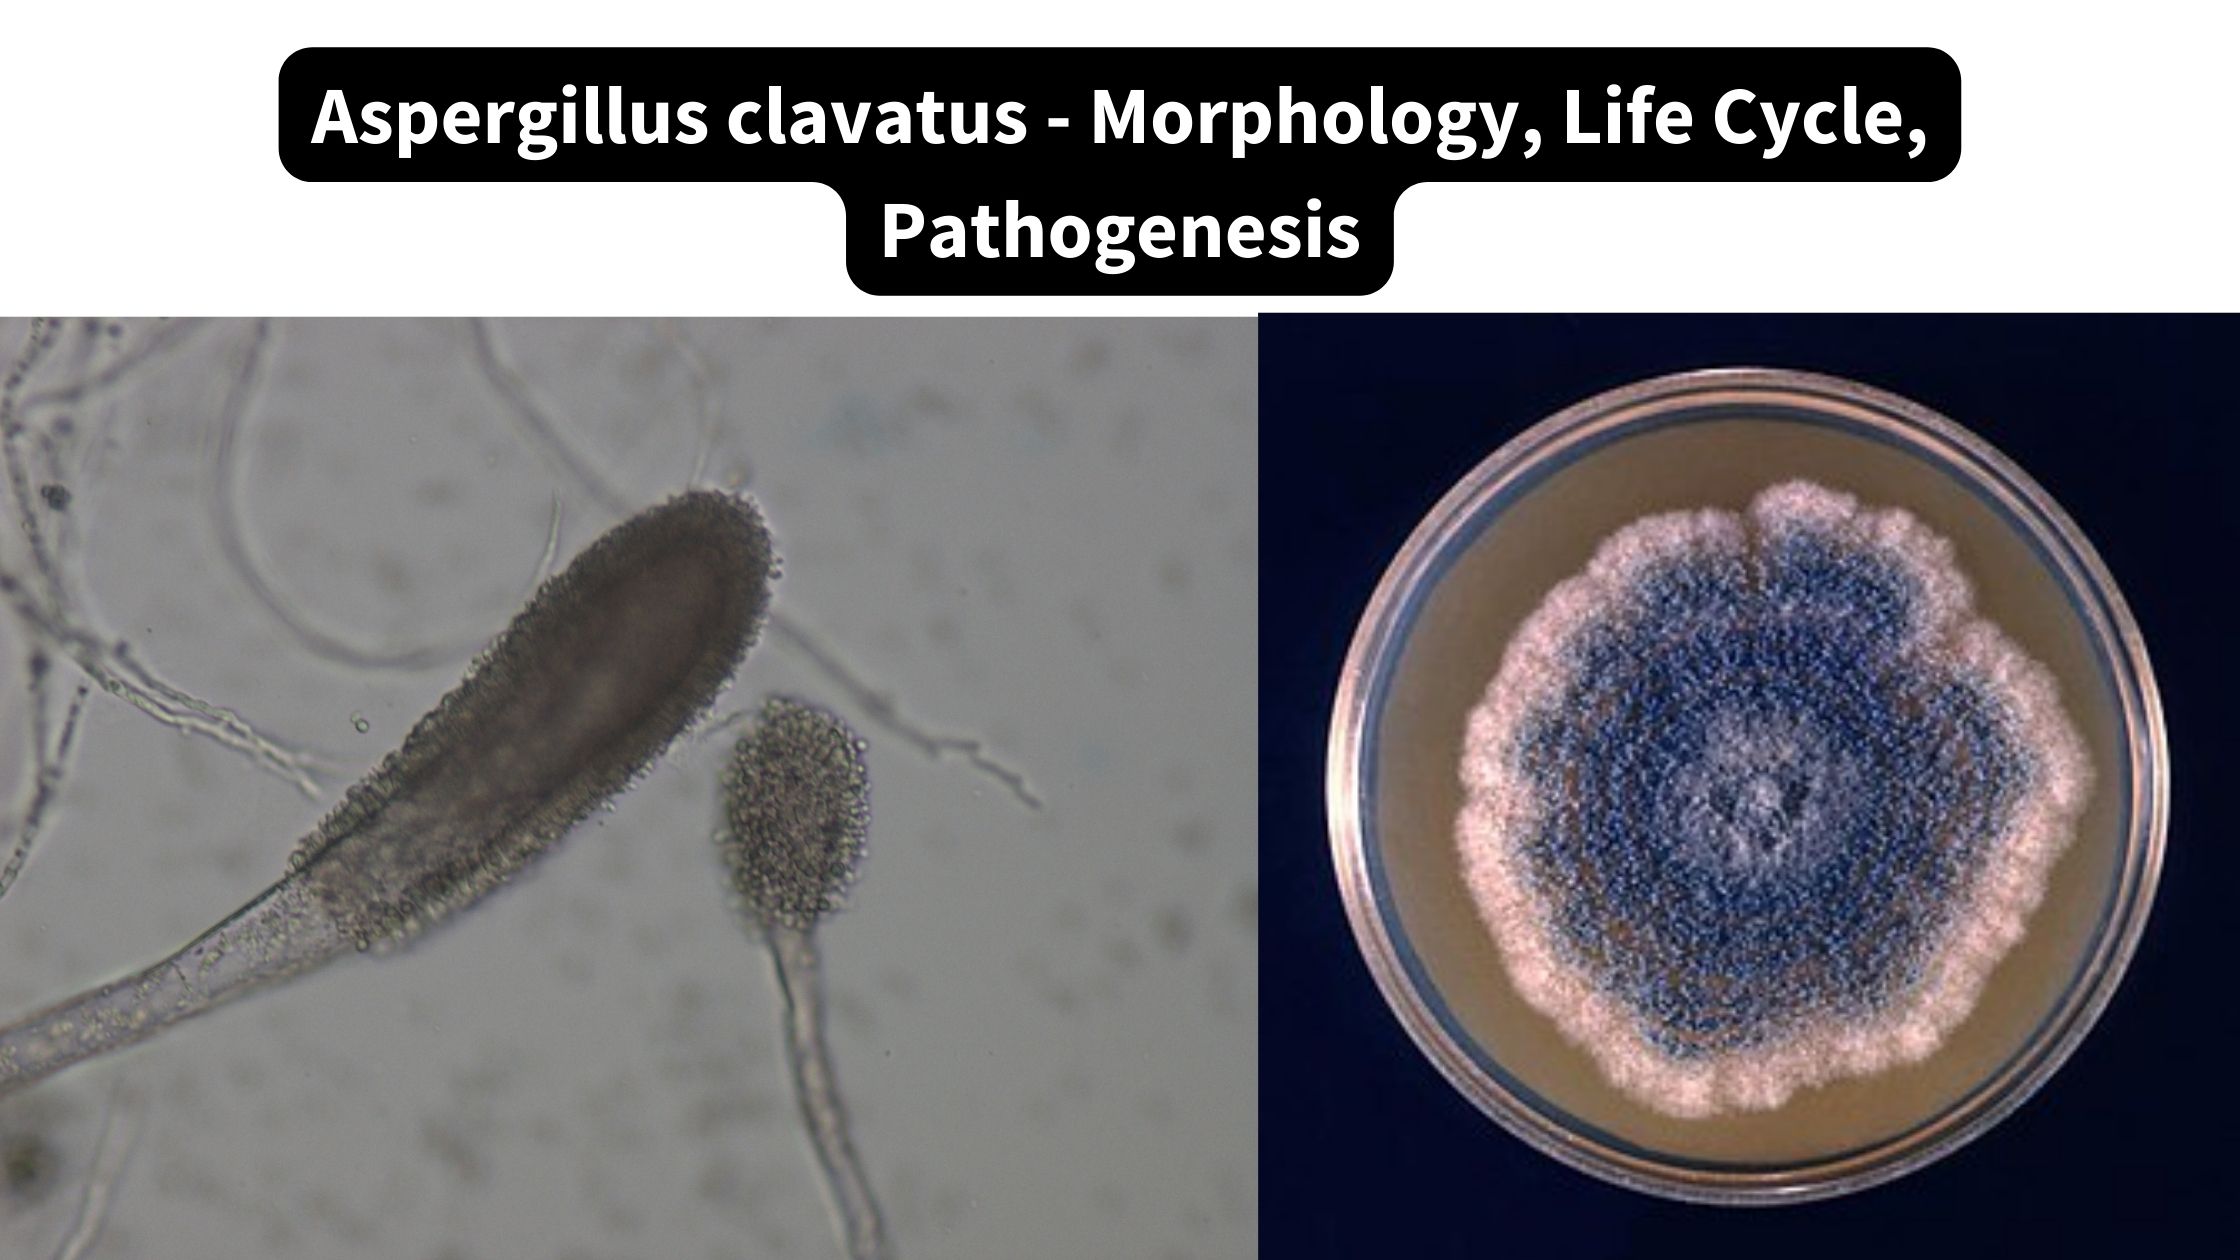 Aspergillus clavatus - Morphology, Life Cycle, Pathogenesis